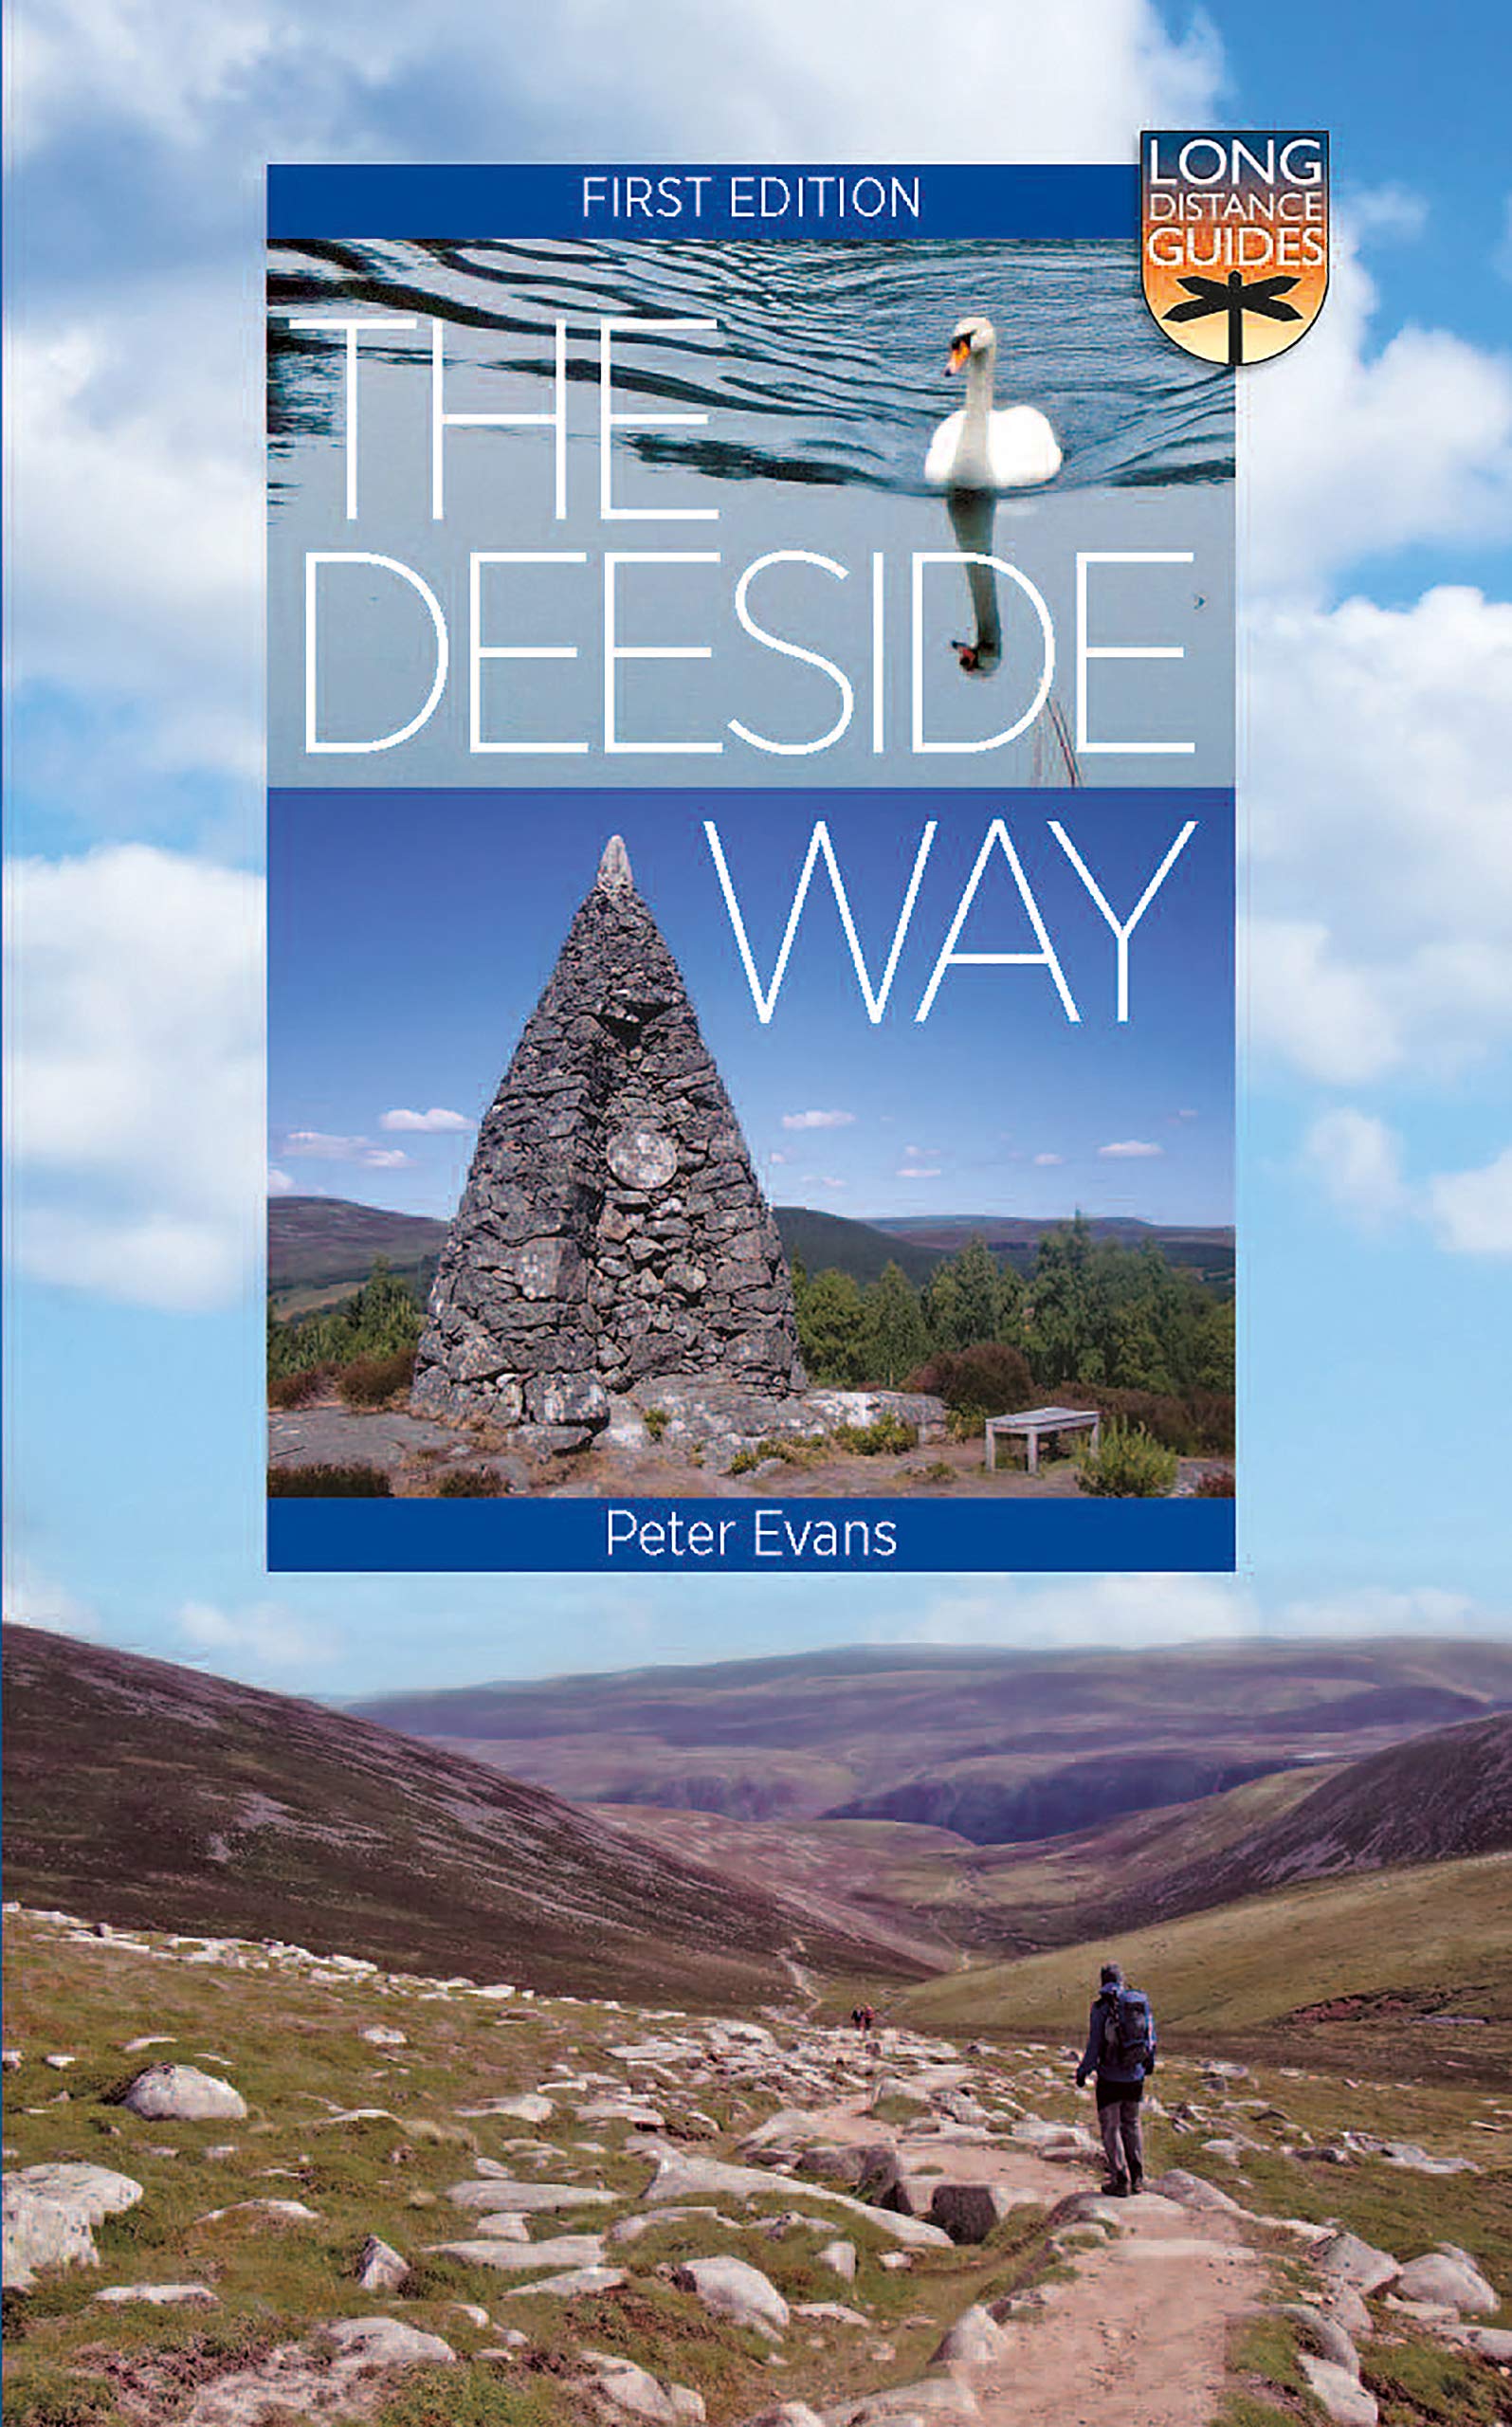 Online bestellen: Wandelgids The Deeside Way | Birlinn